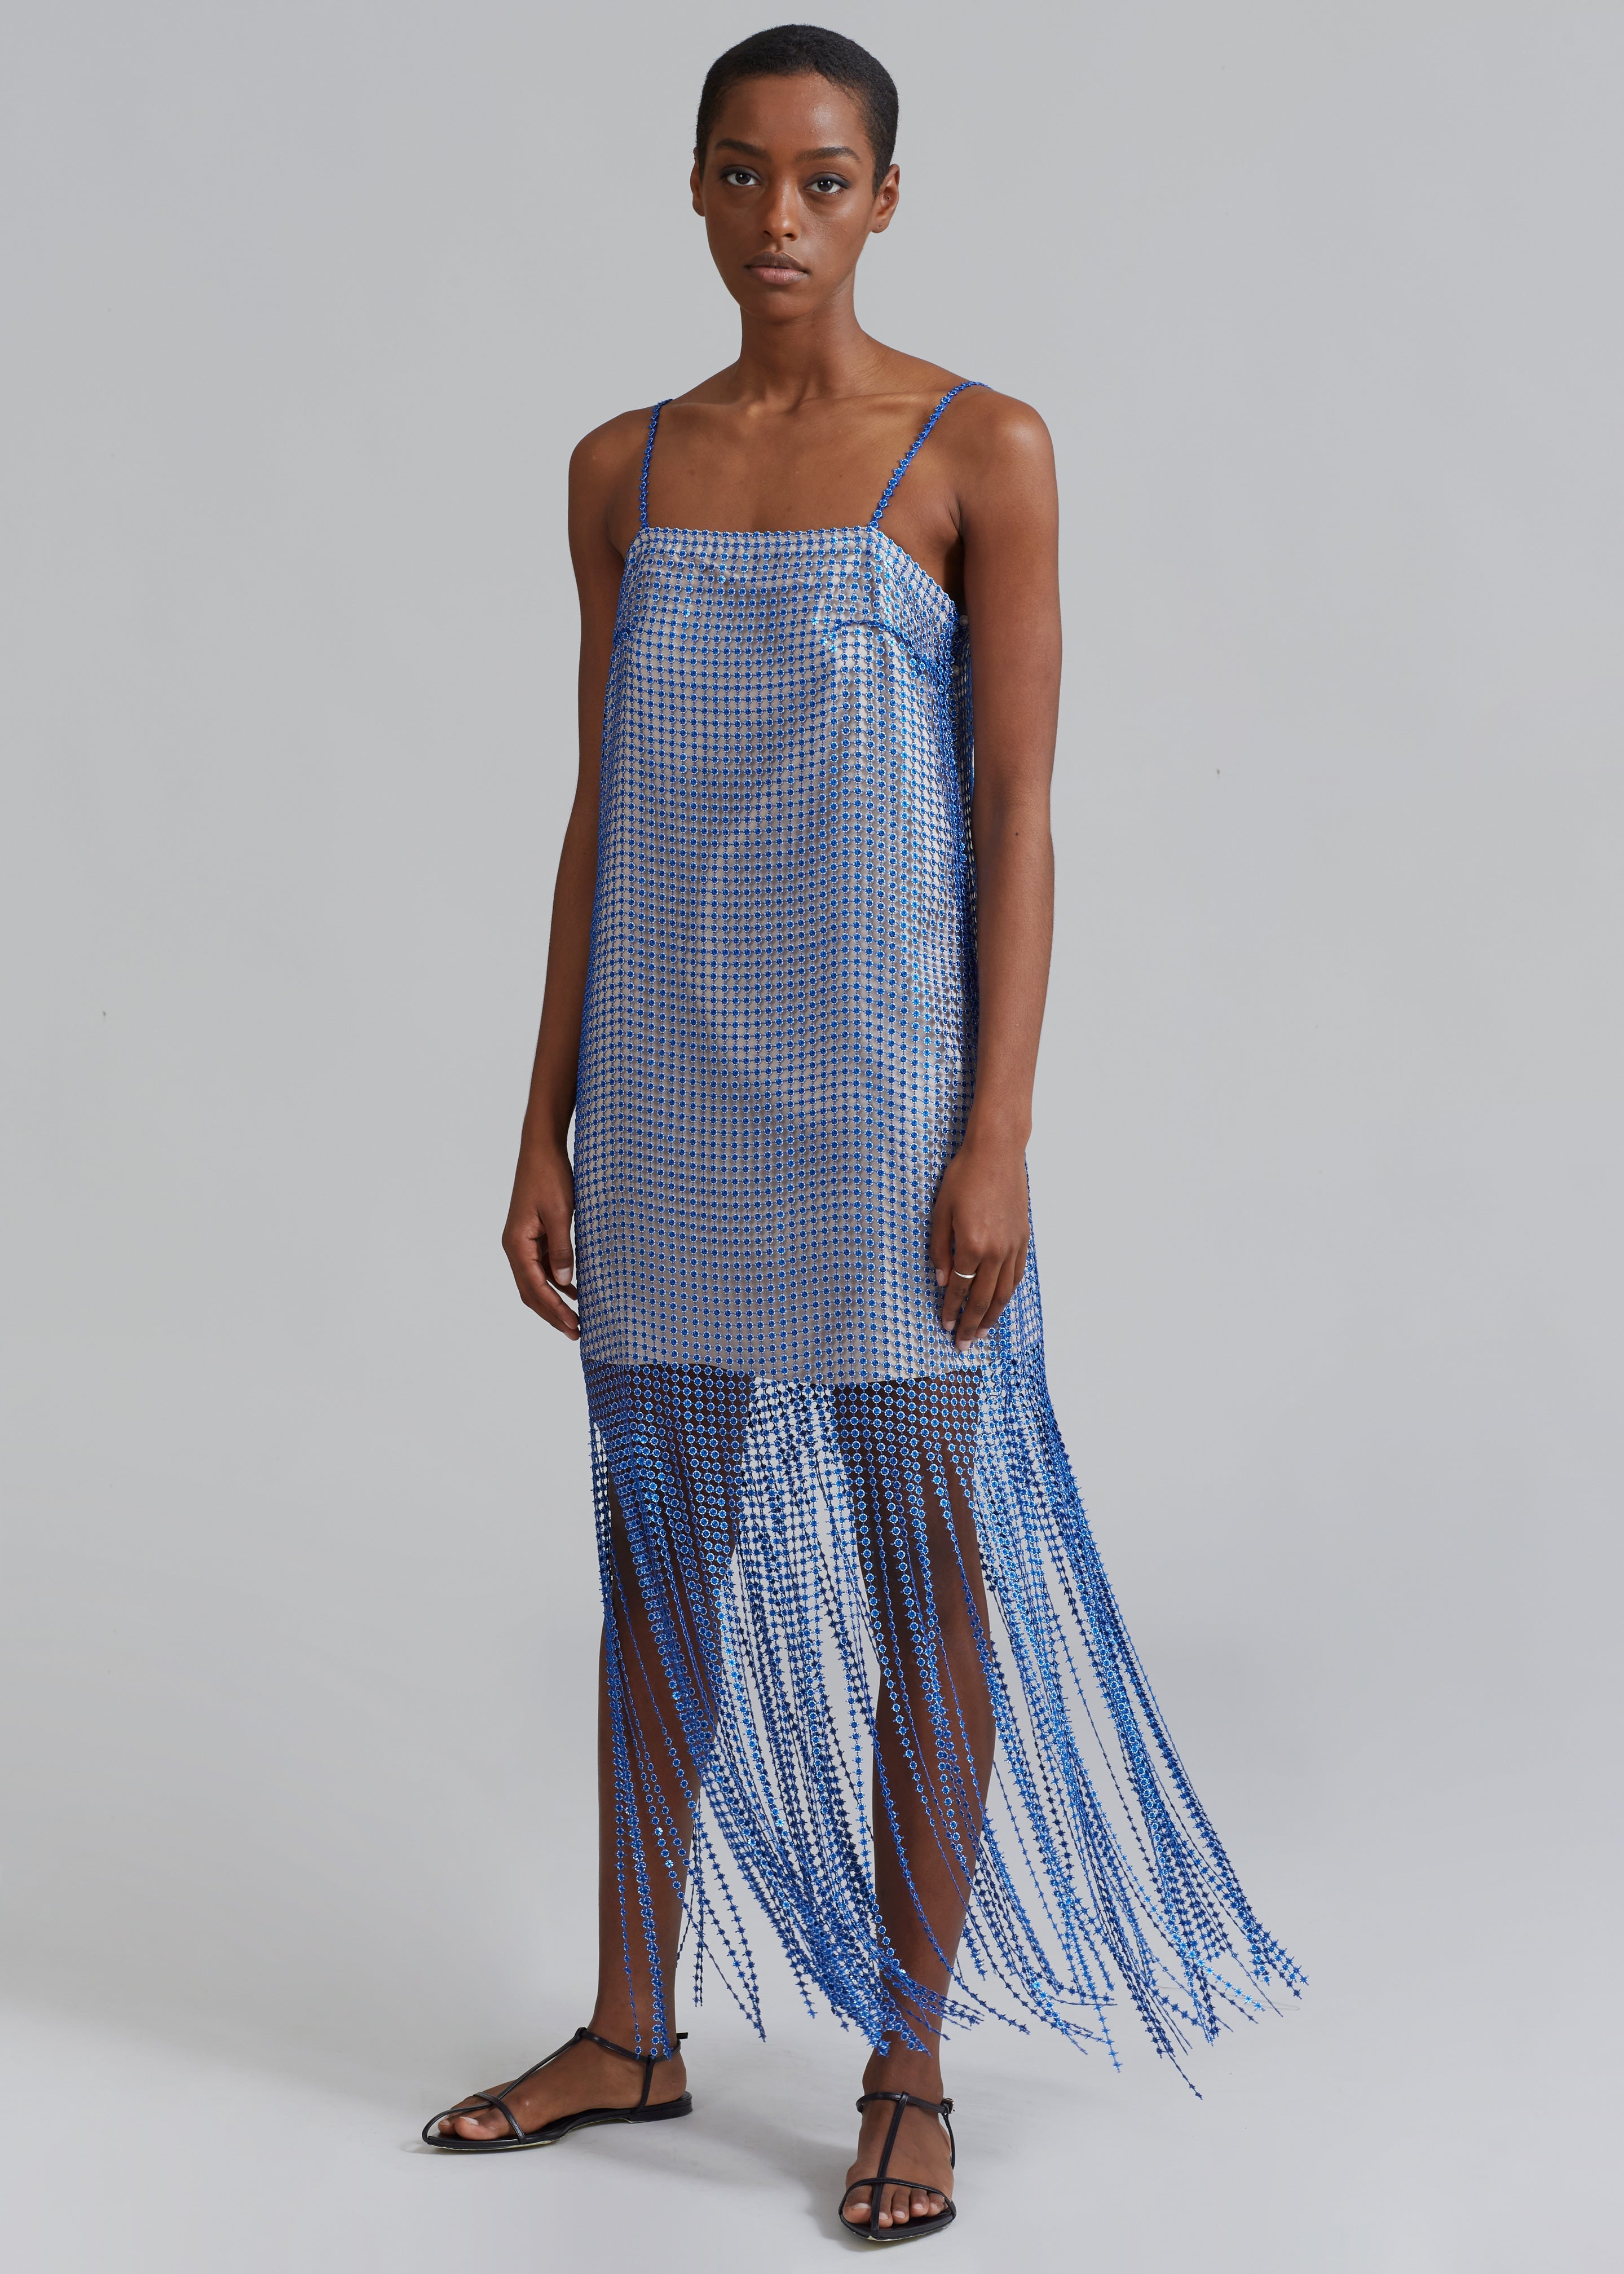 REMAIN Sequin Lace Fringe Dress - Surf The Web Comb. - 1